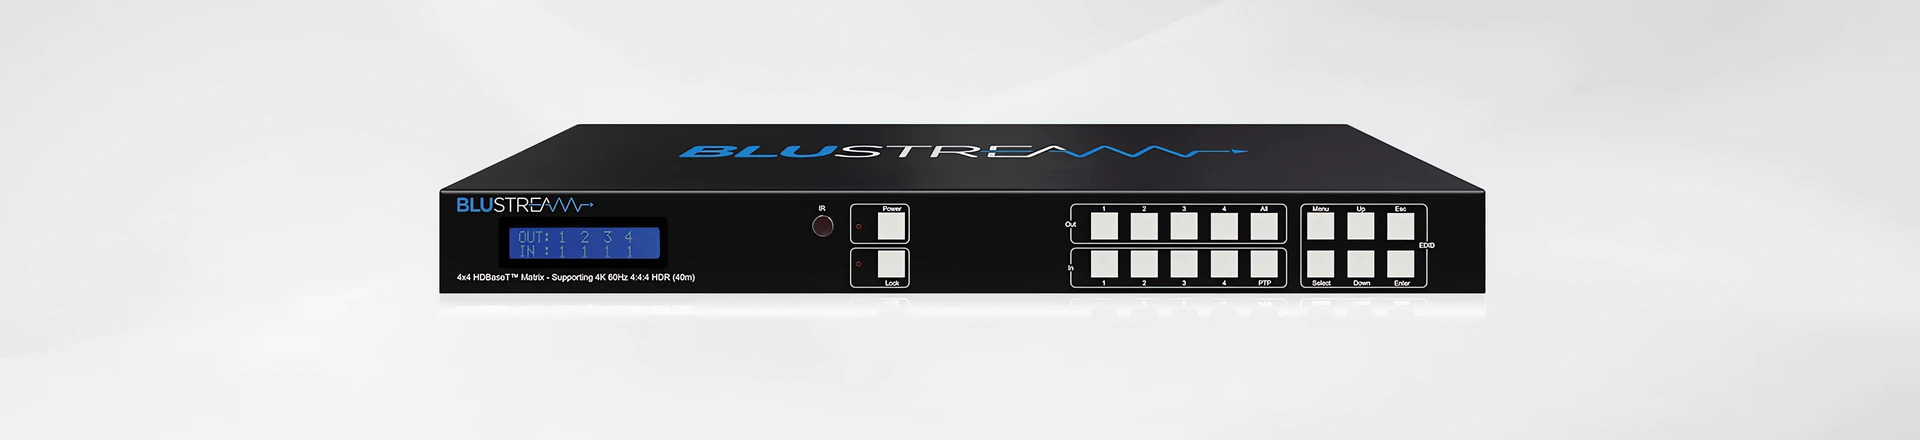 Blustream prezentuje zestaw do transmisji video HDBaseT  